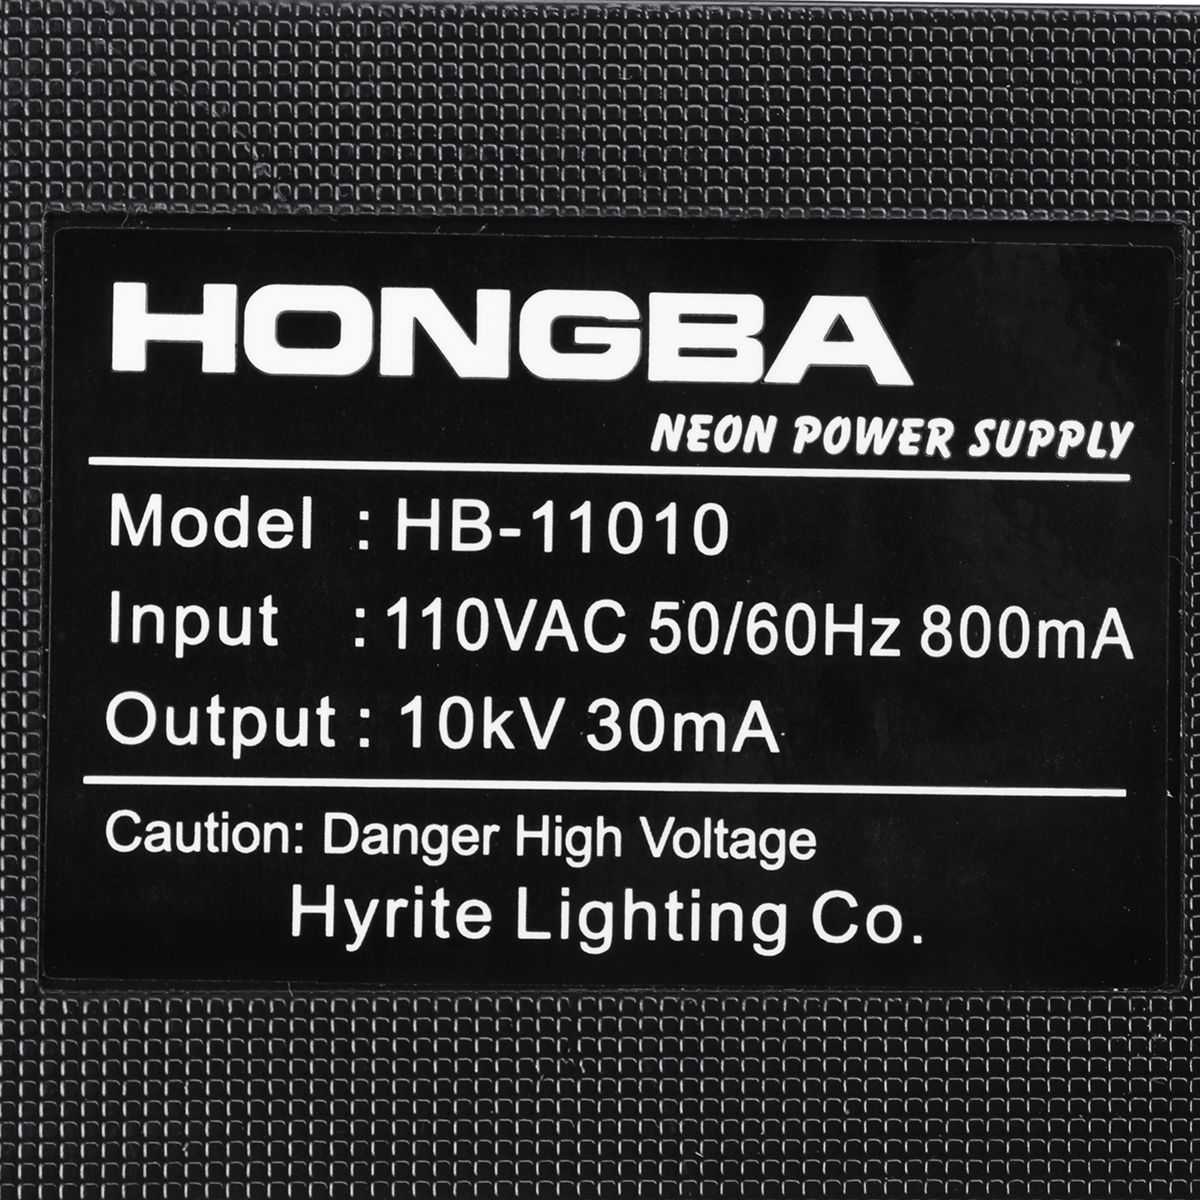 110V-10KV-30mA-Black-Neon-Electronic-Lighting-Transformer-LED-Driver-Power-Supply-Load-4-10meters-1668059